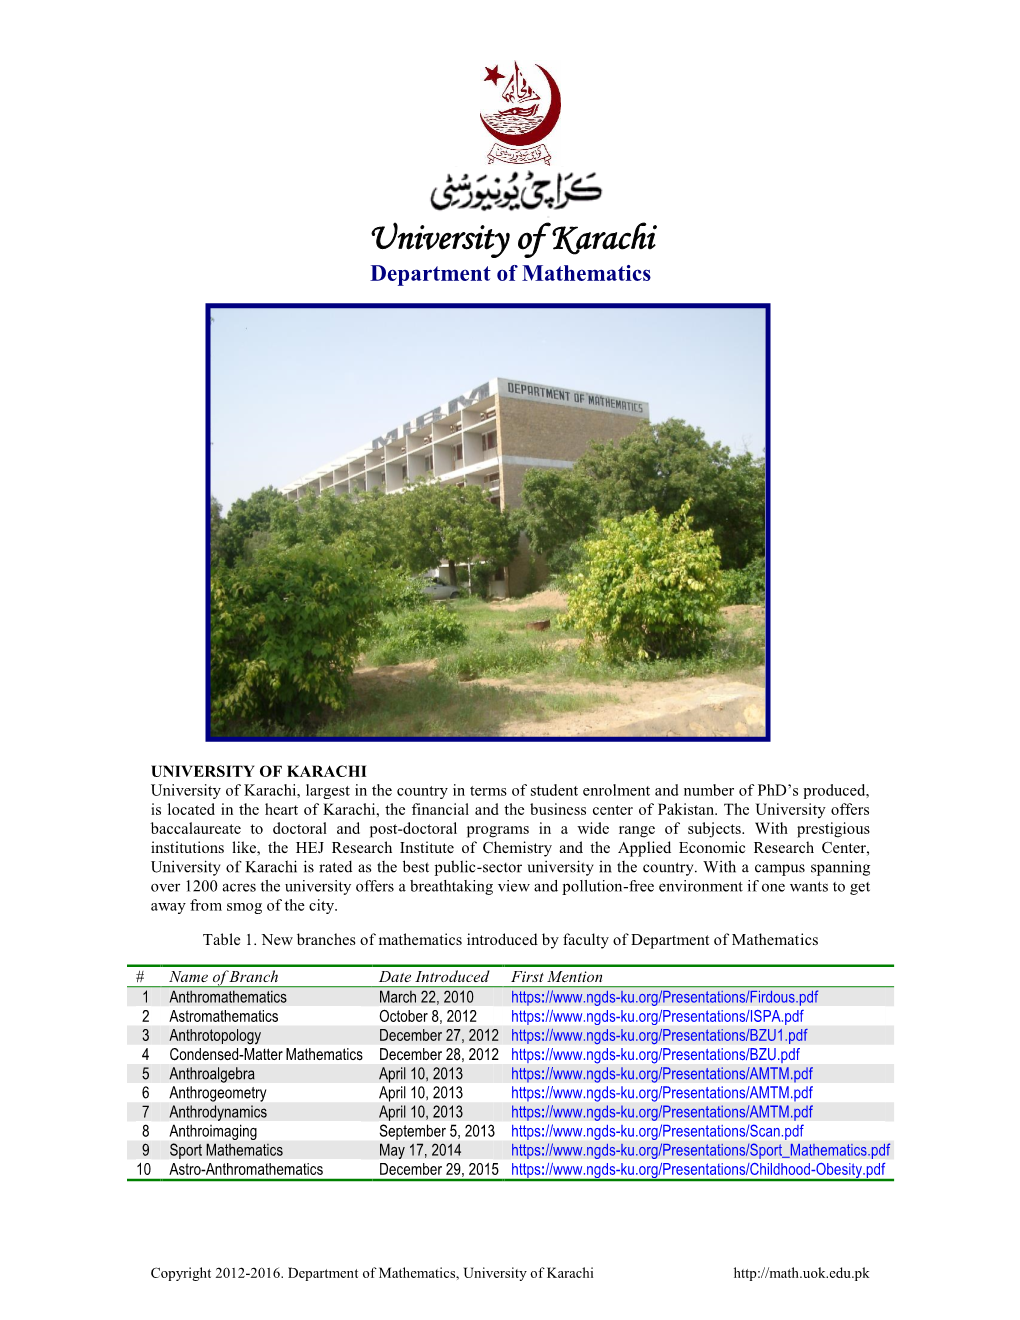 University of Karachi Department of Mathematics